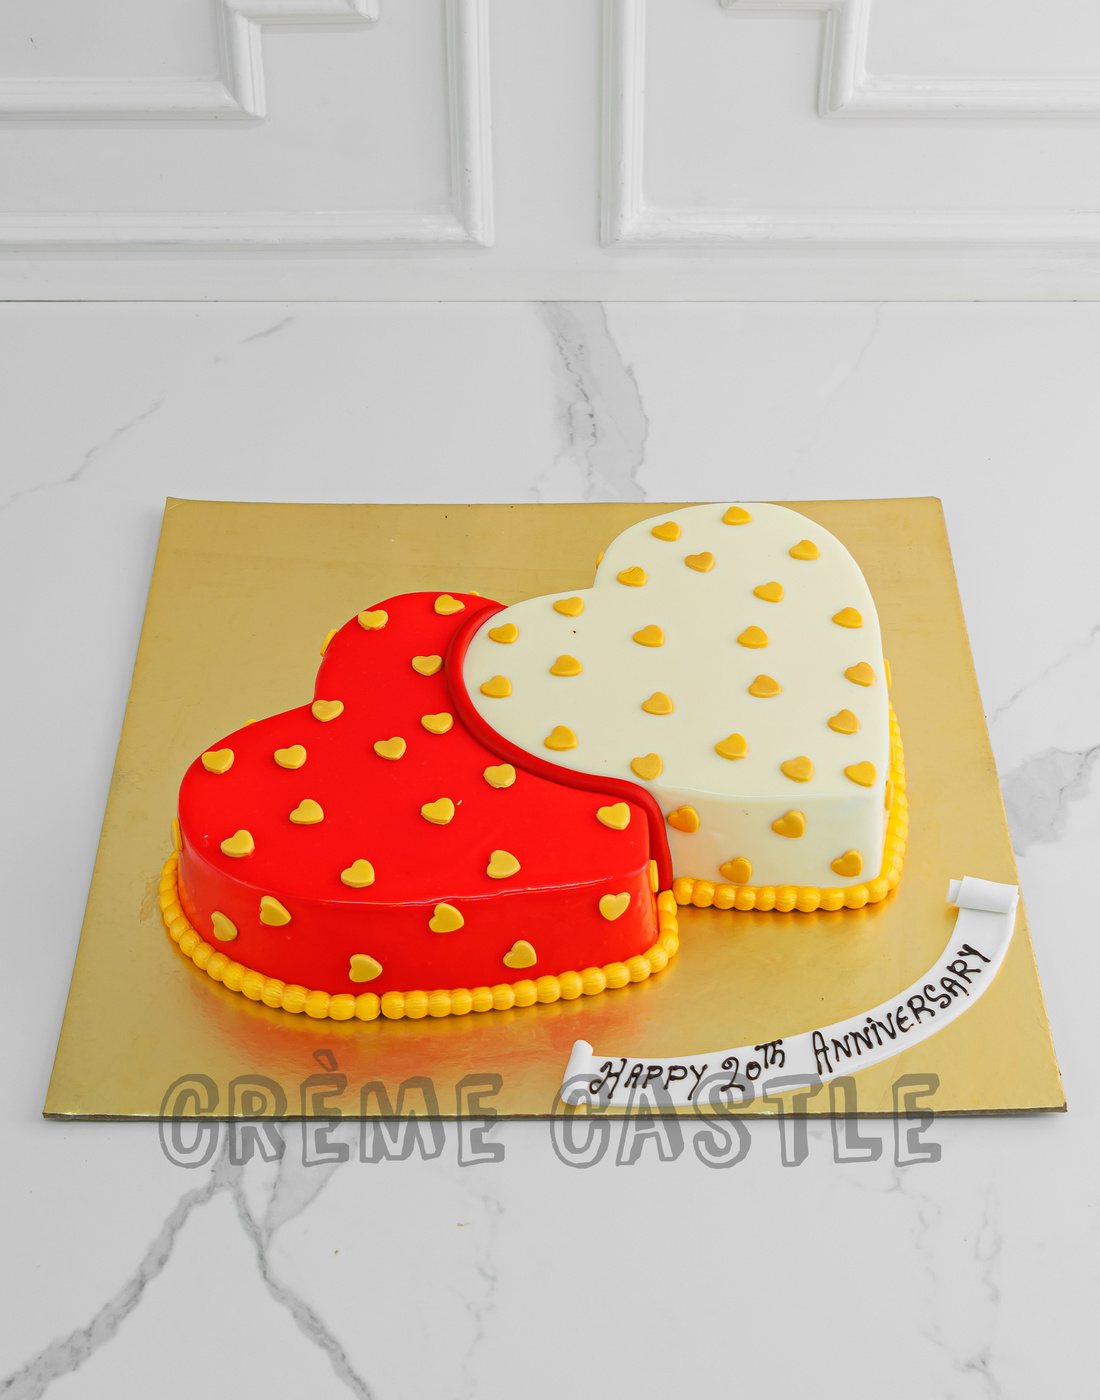 Double Heart Cake - Creme Castle